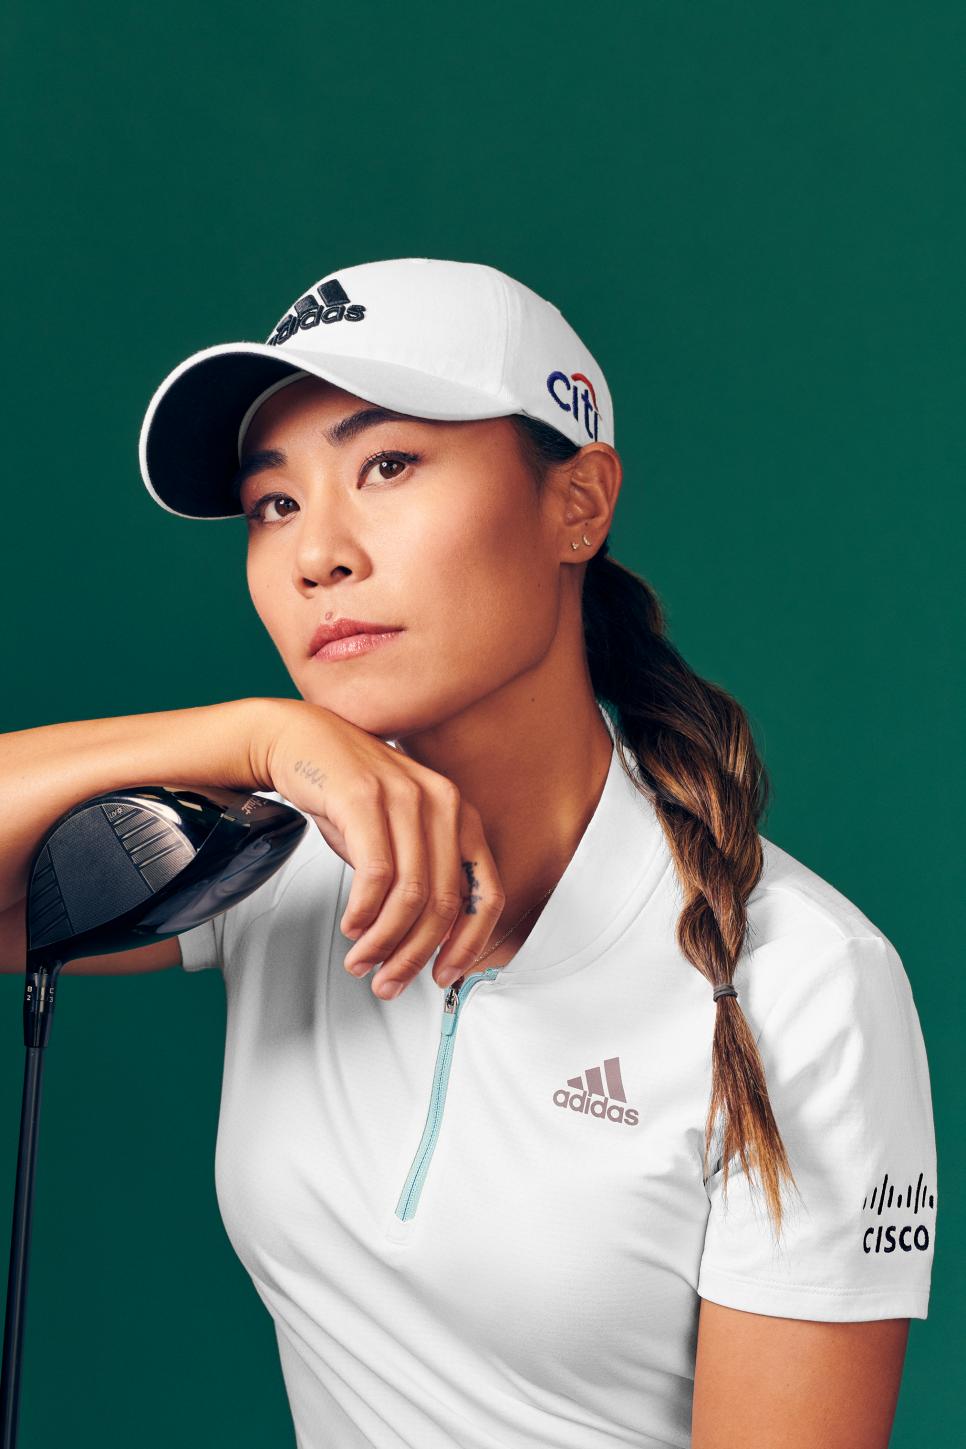 Danielle Kang for Golf Digest